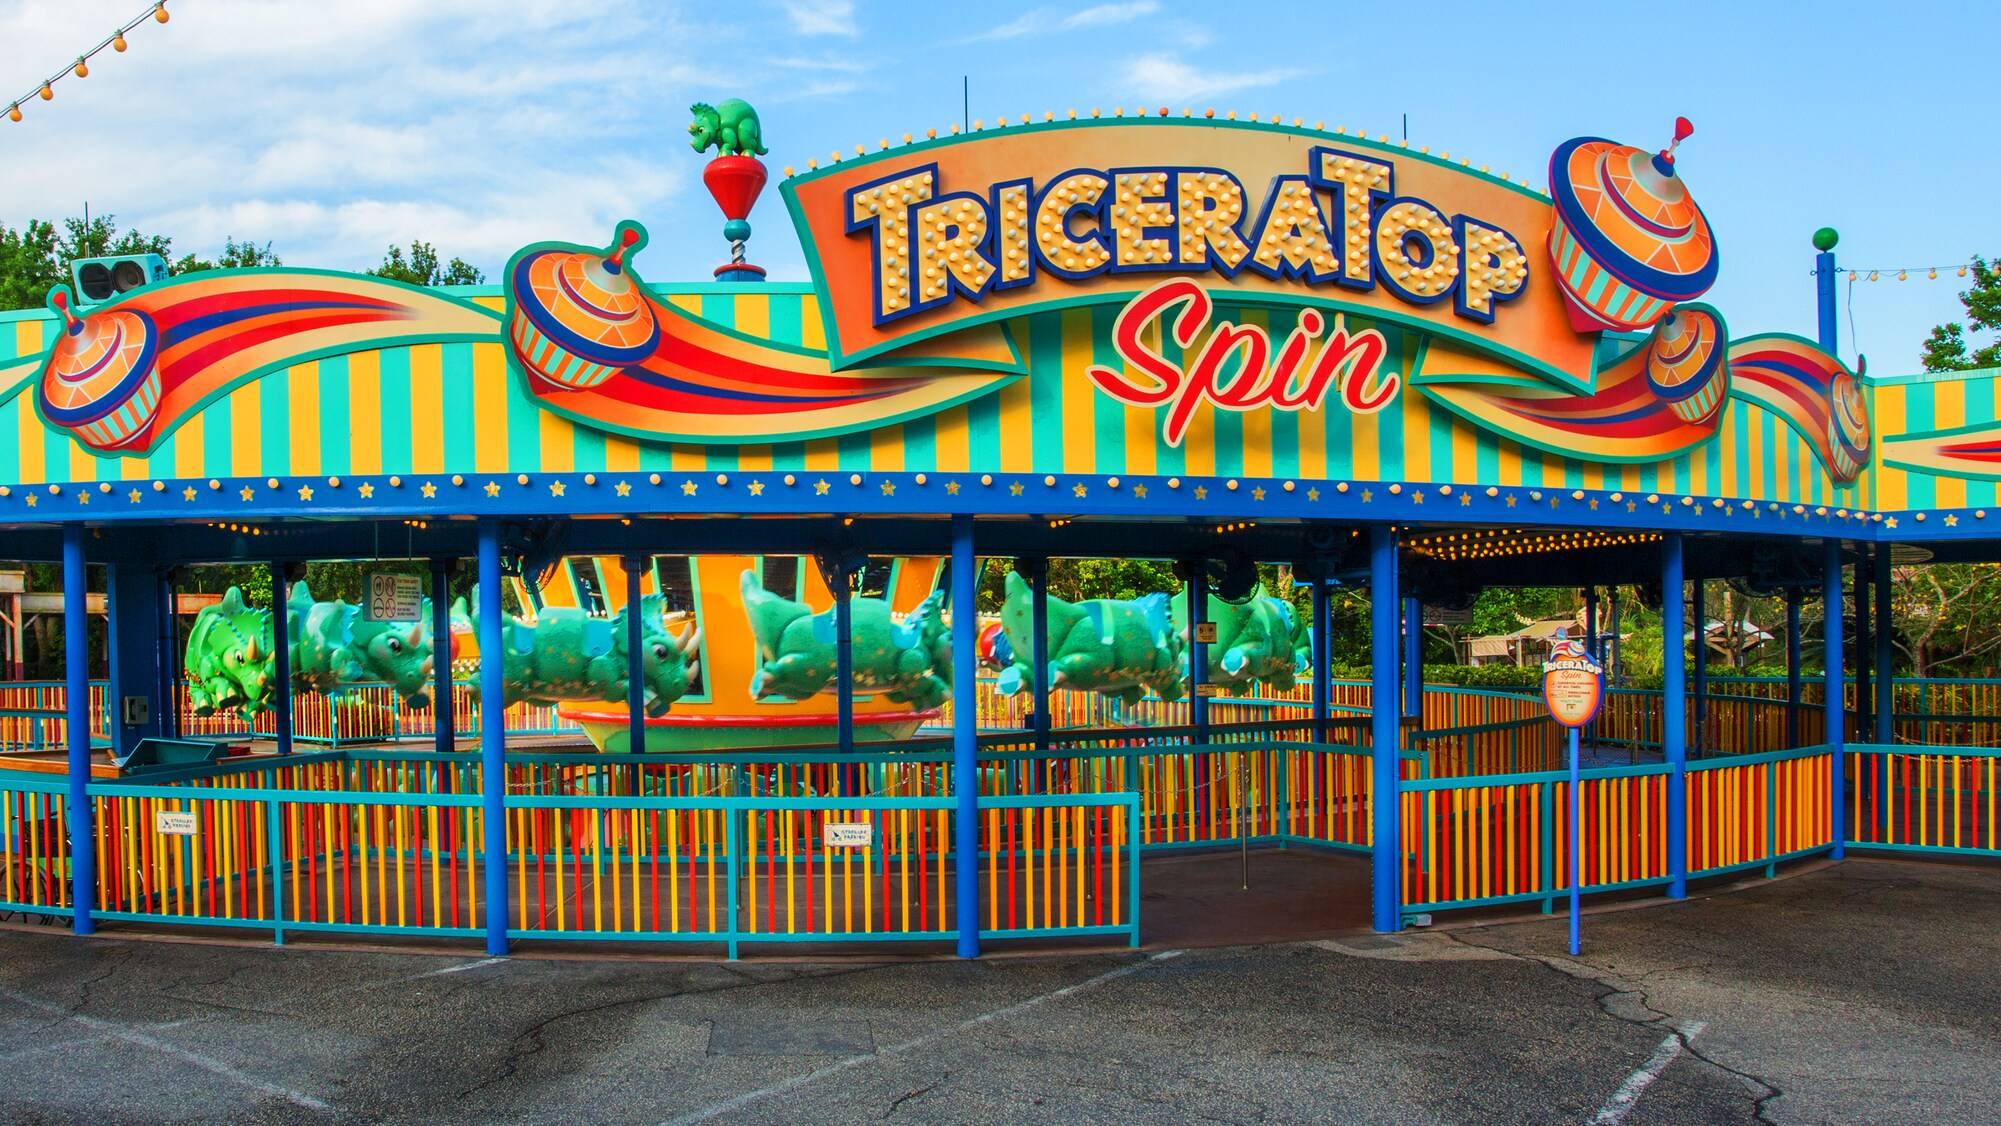 TriceraTop Spin closing for refurbishment next week